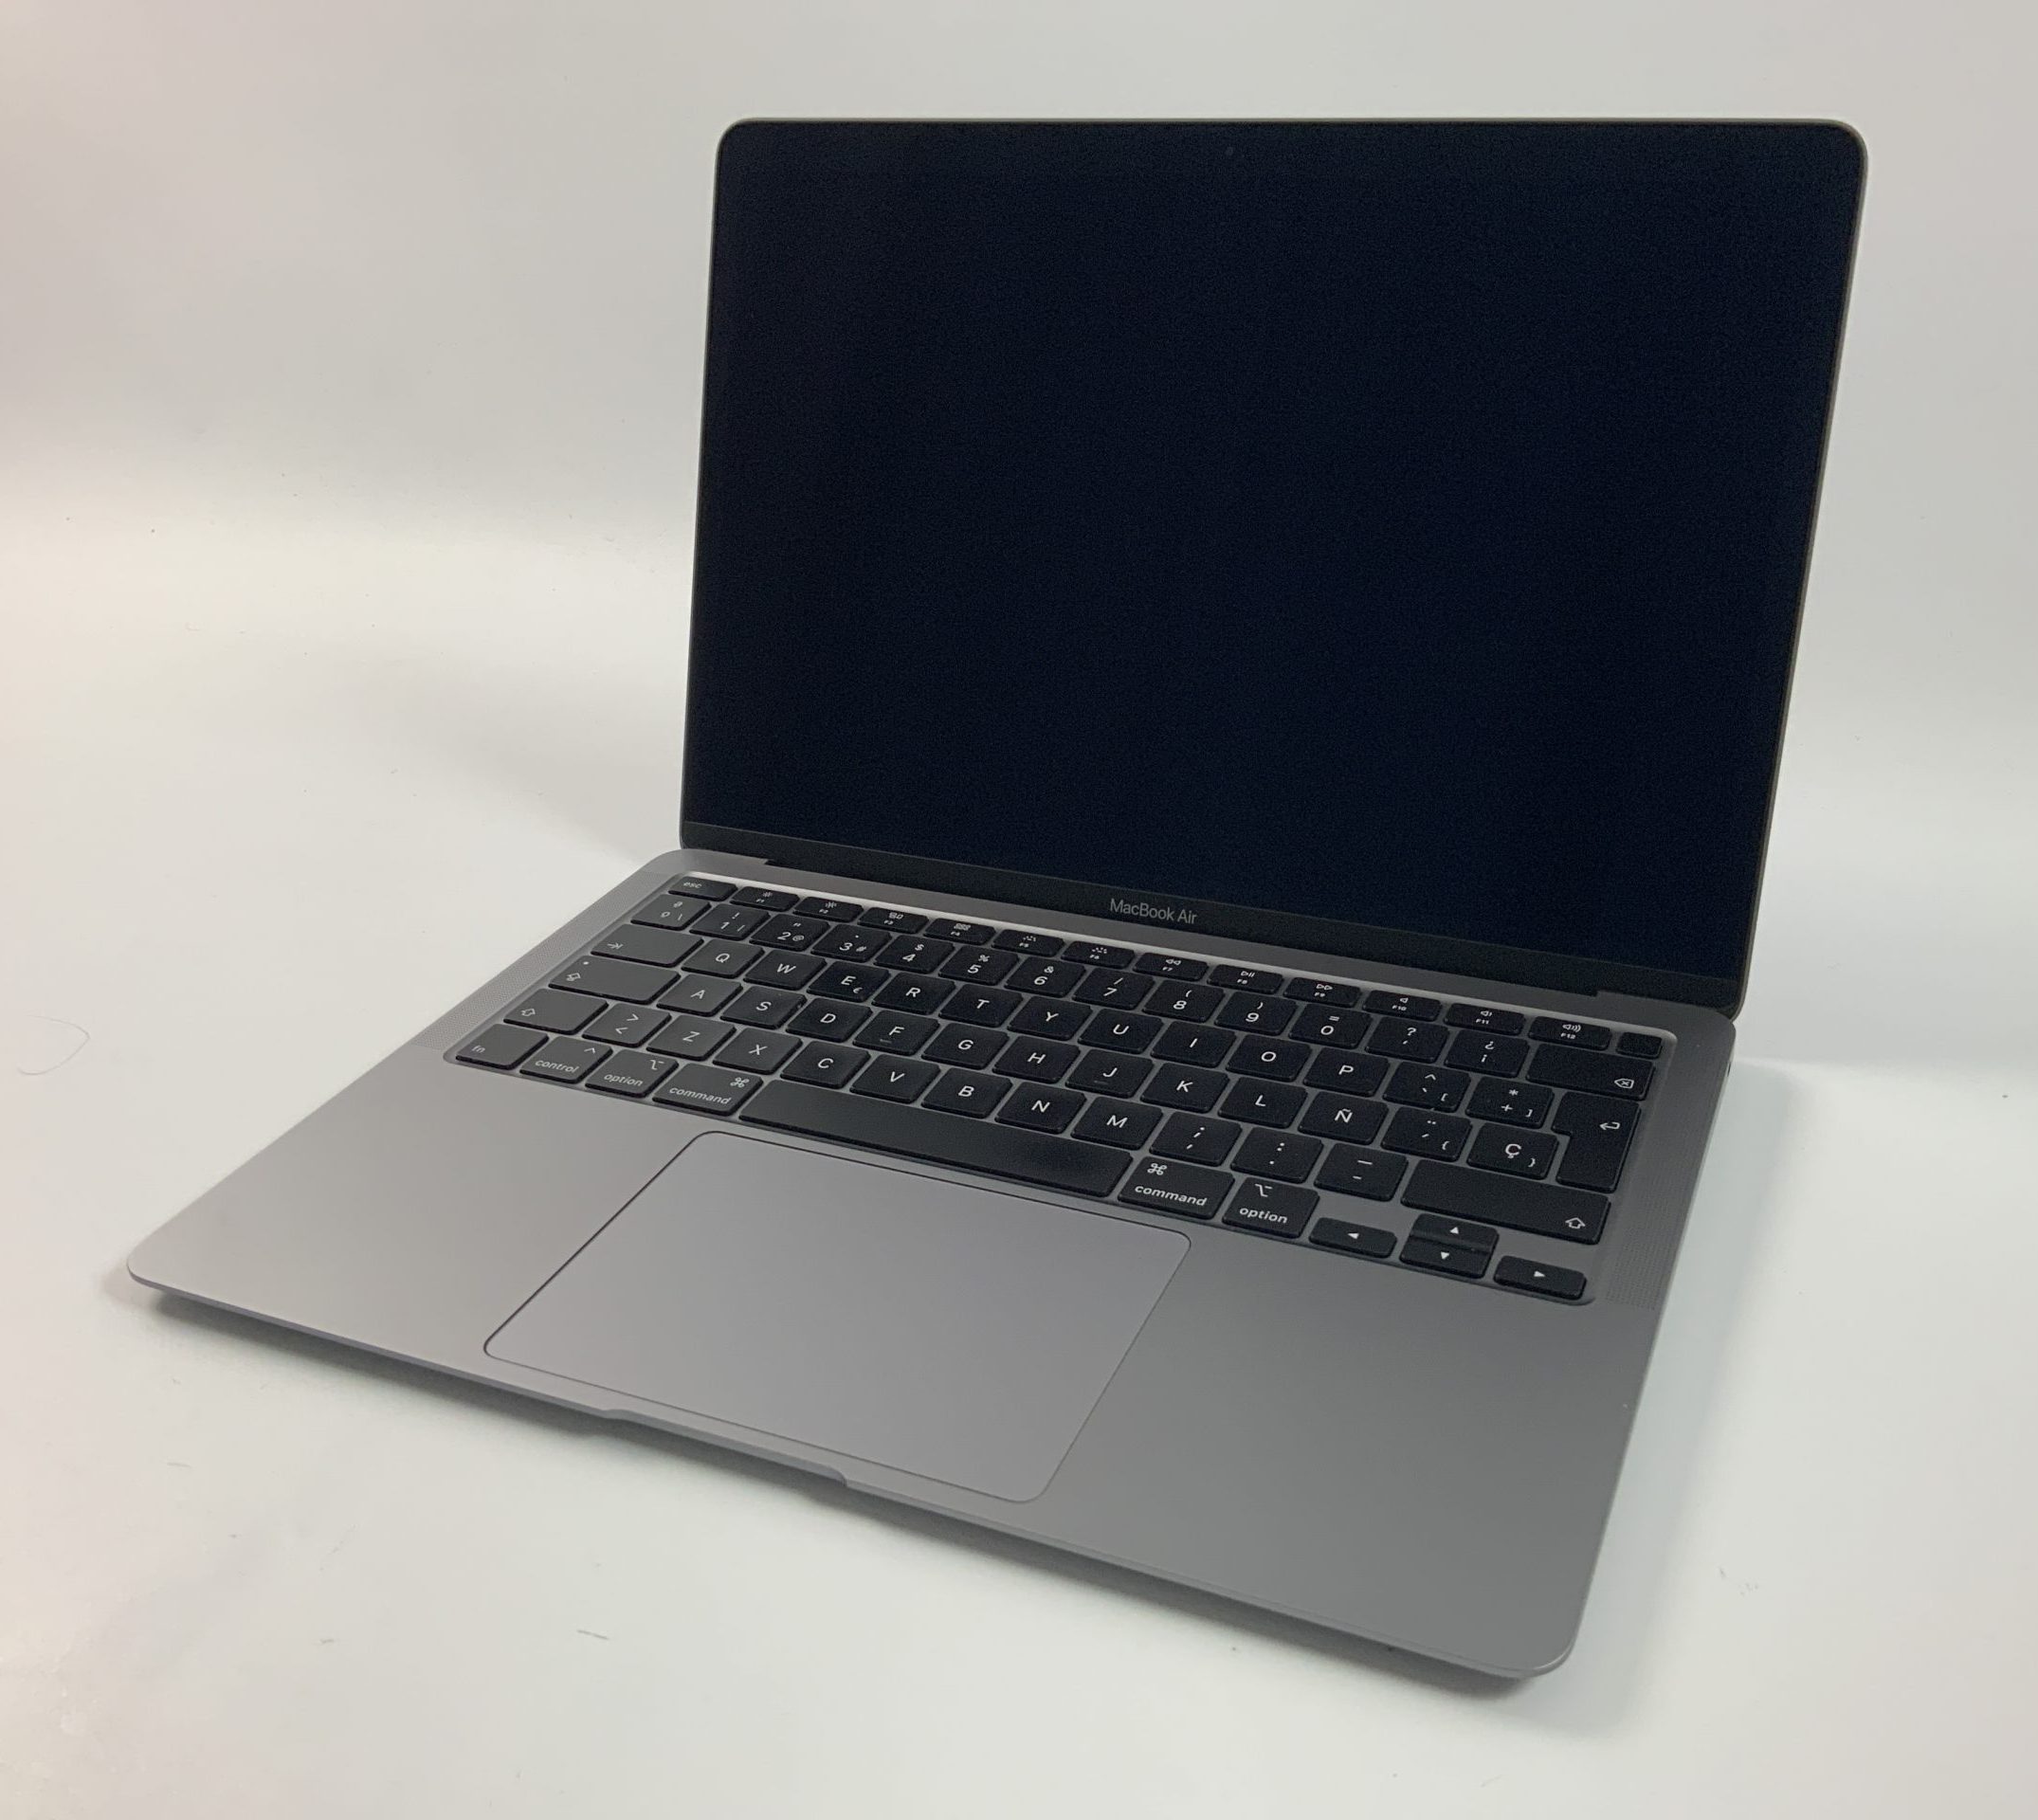 MacBook Air 13" Early 2020 (Intel Quad-Core i7 1.2 GHz 8 GB RAM 256 GB SSD), Space Gray, Intel Quad-Core i7 1.2 GHz, 8 GB RAM, 256 GB SSD, Bild 1